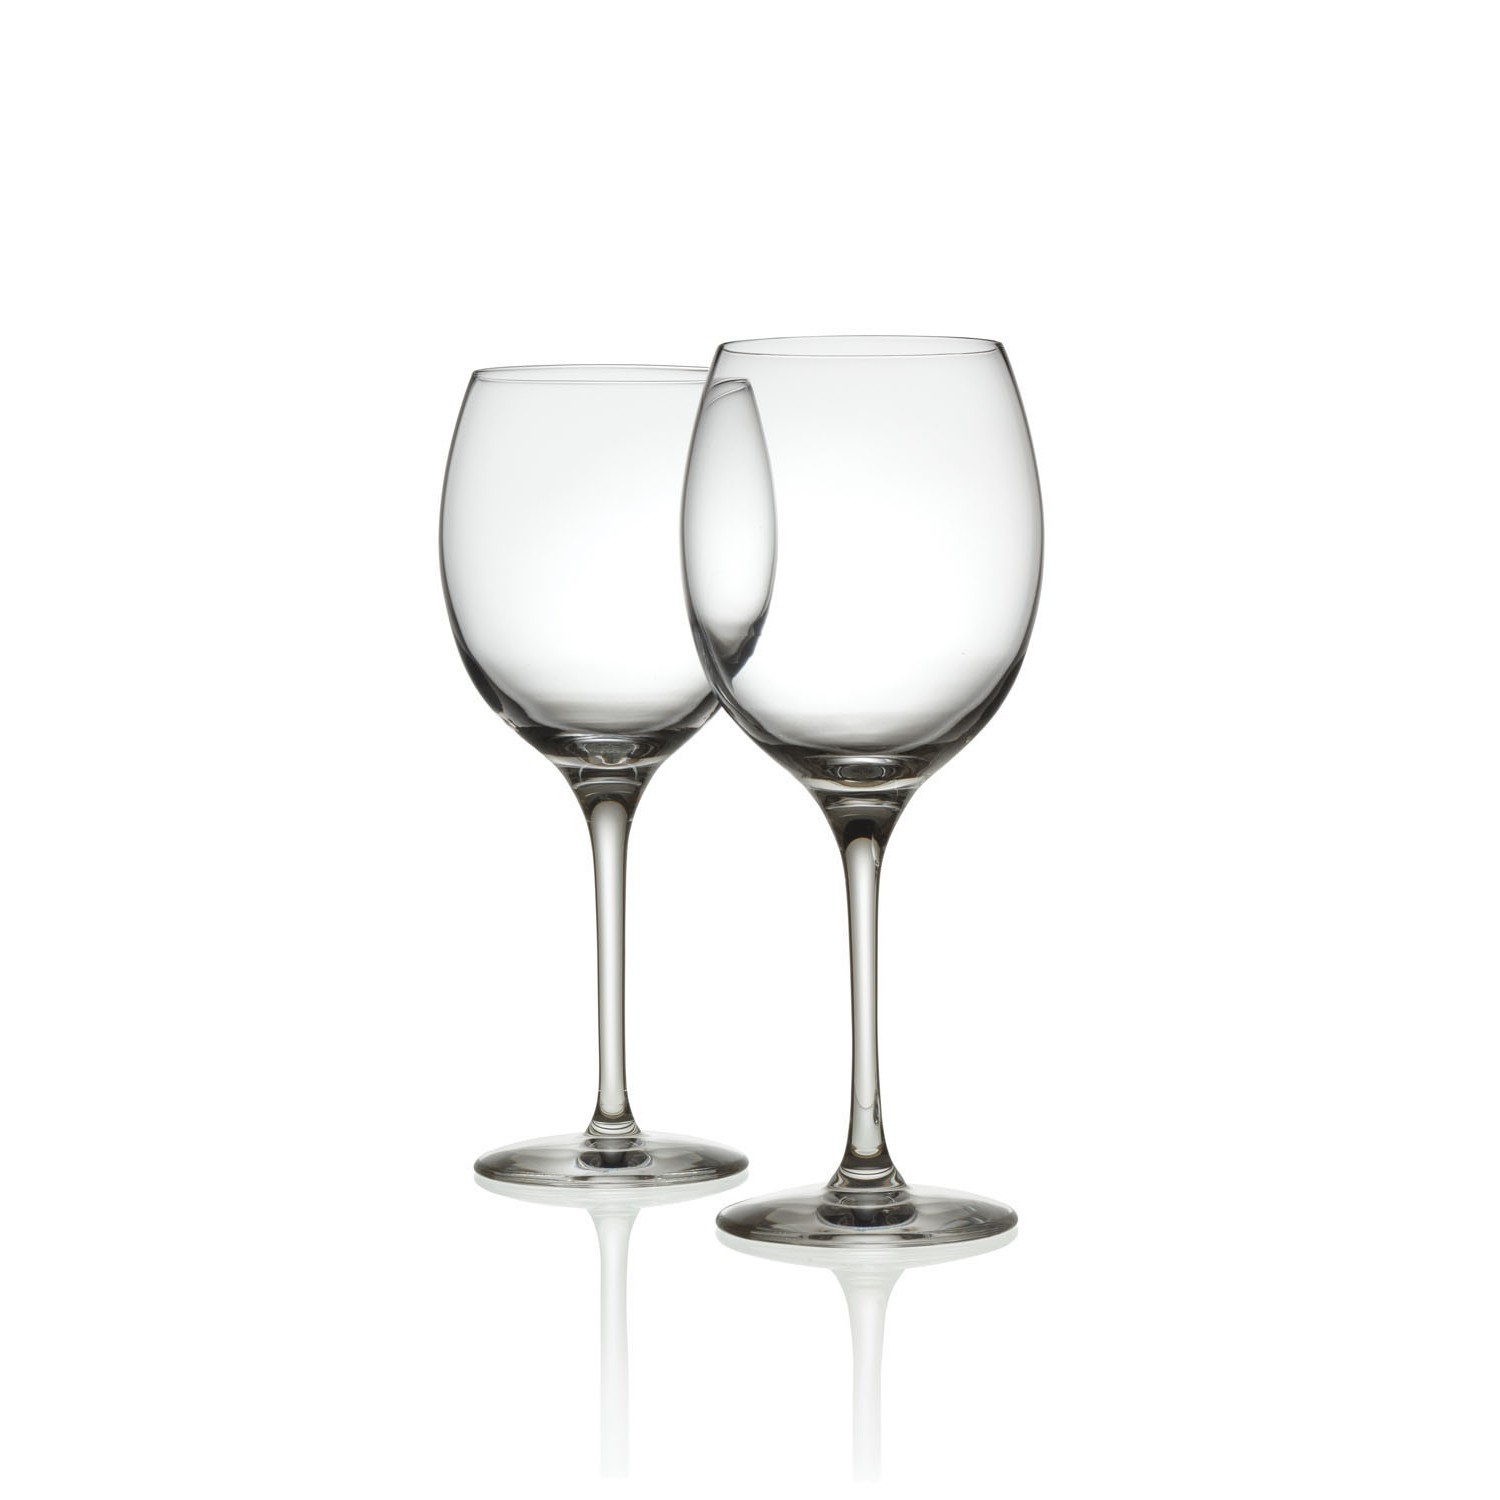 Set due Bicchieri Vino Bianco MAMI XL SG119/1S2